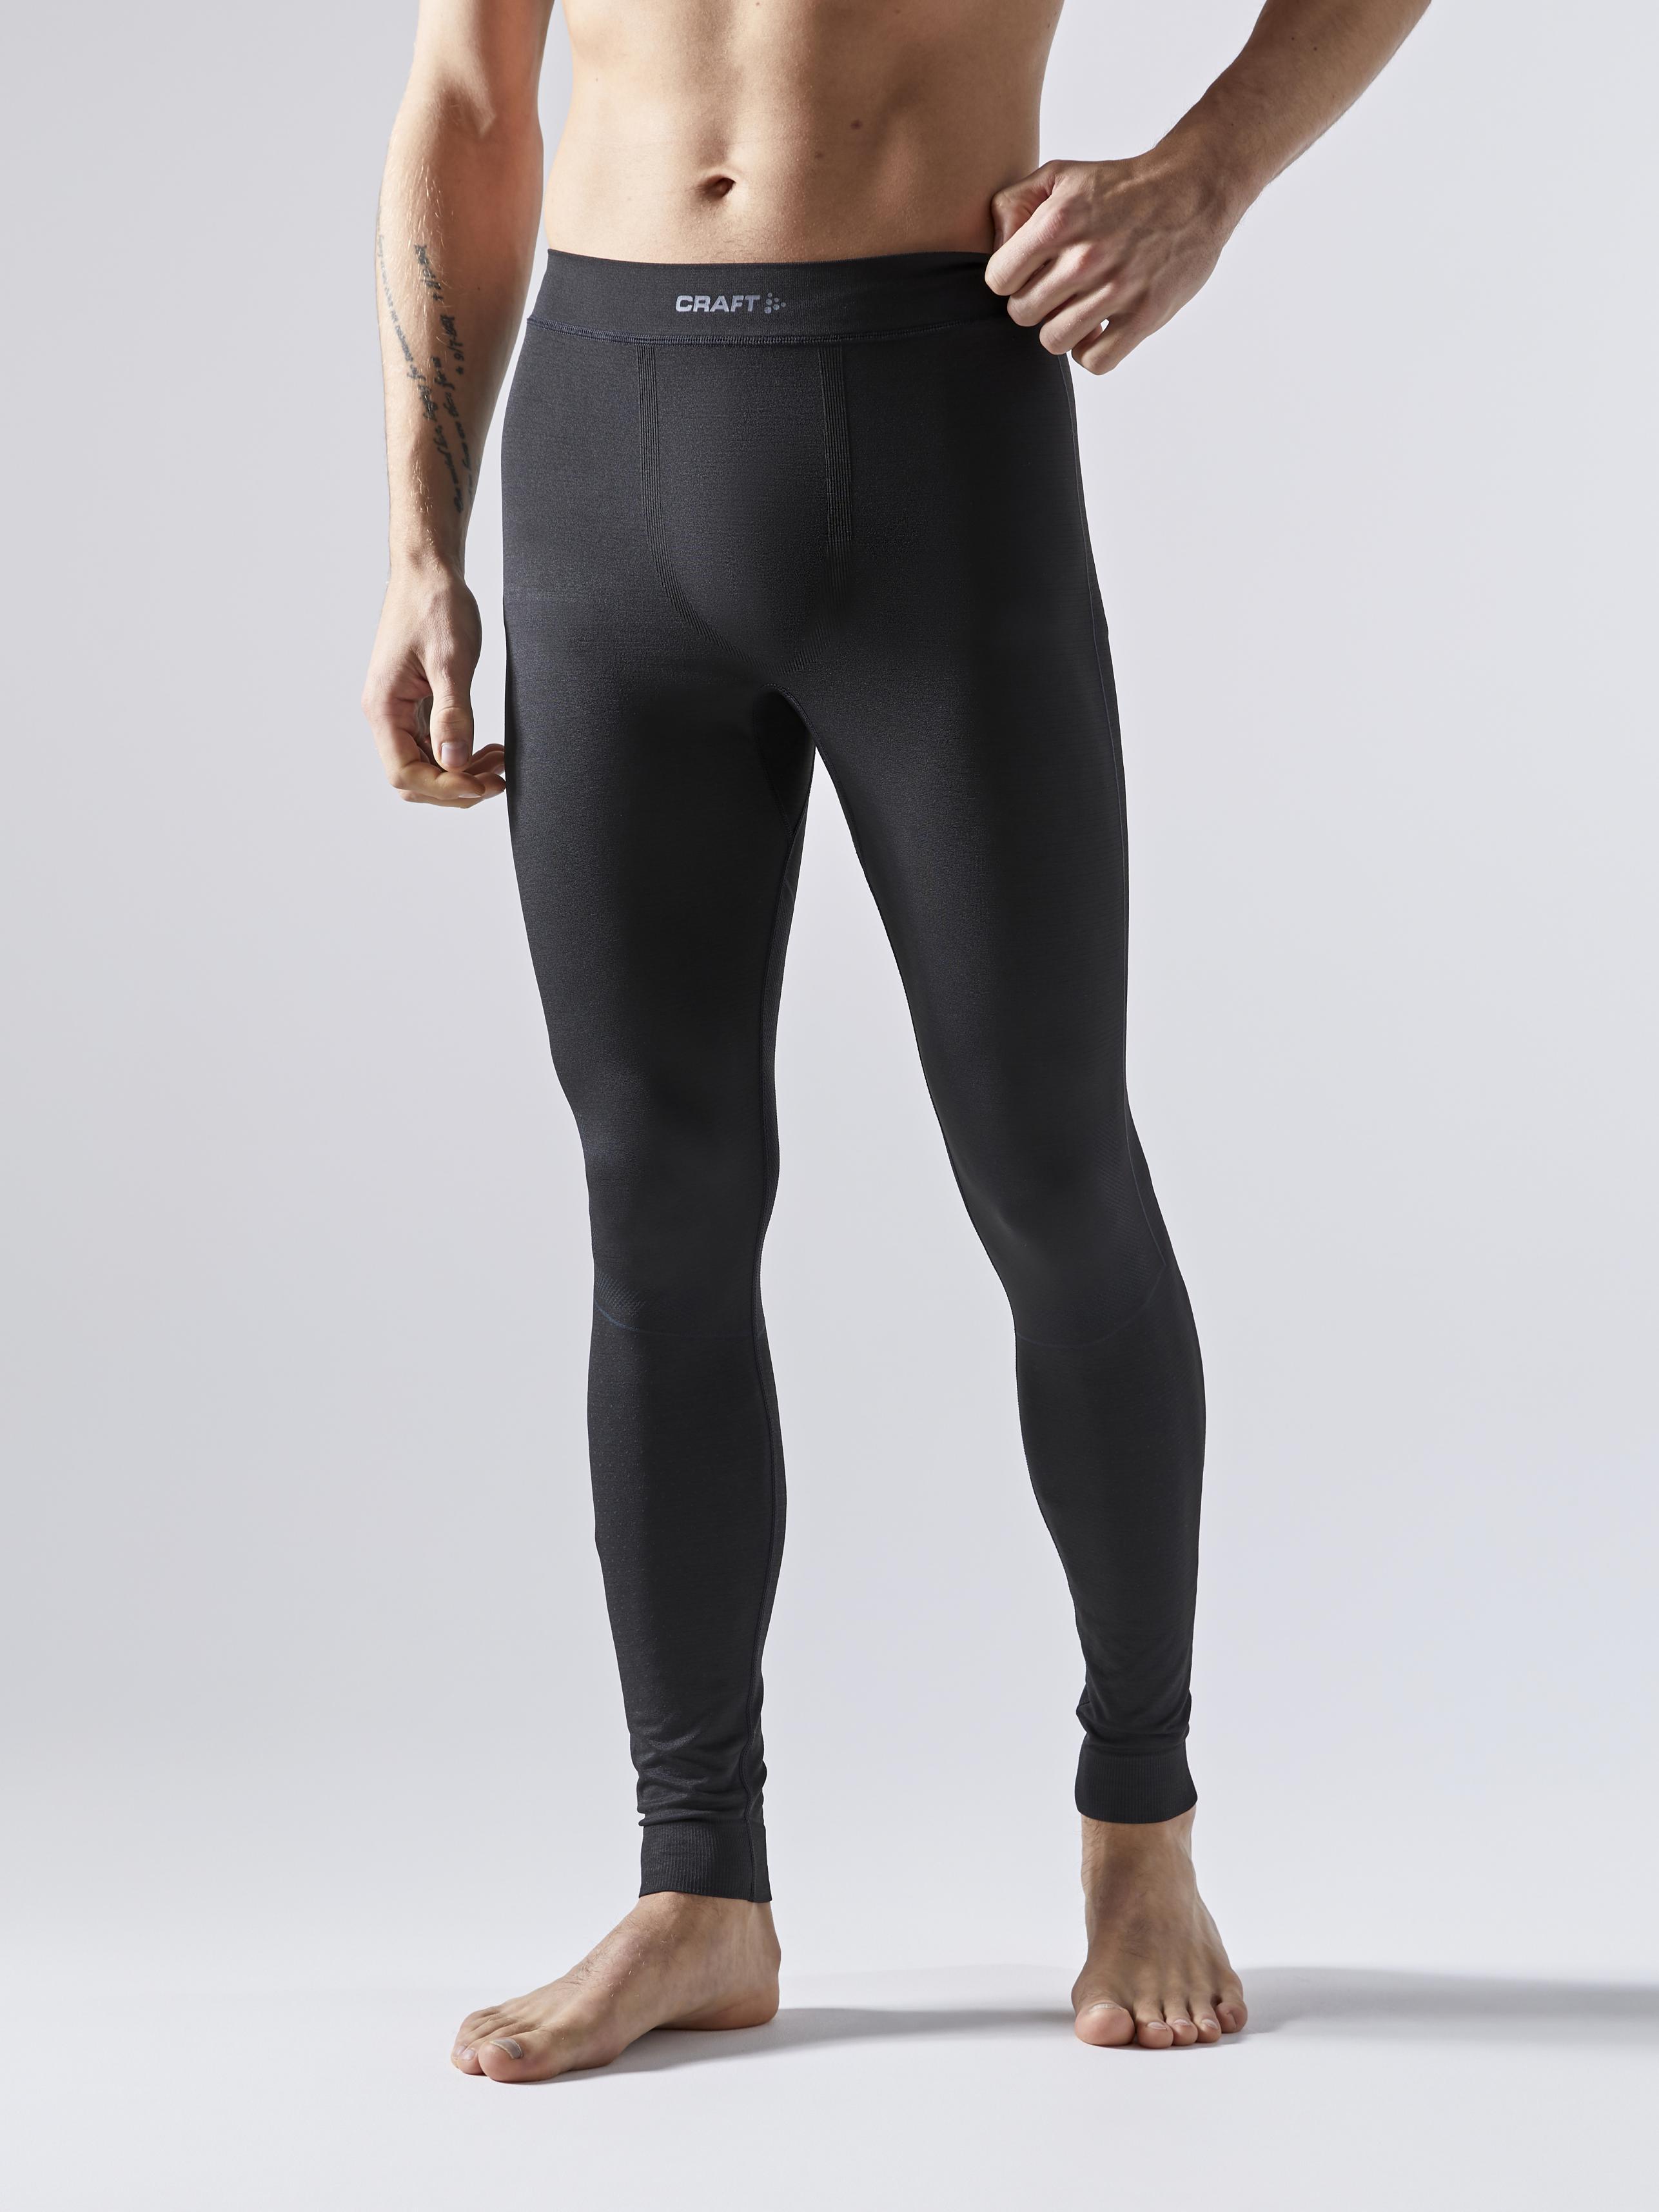 Men's Active Intensity Baselayer Pants by Craft Sportswear US